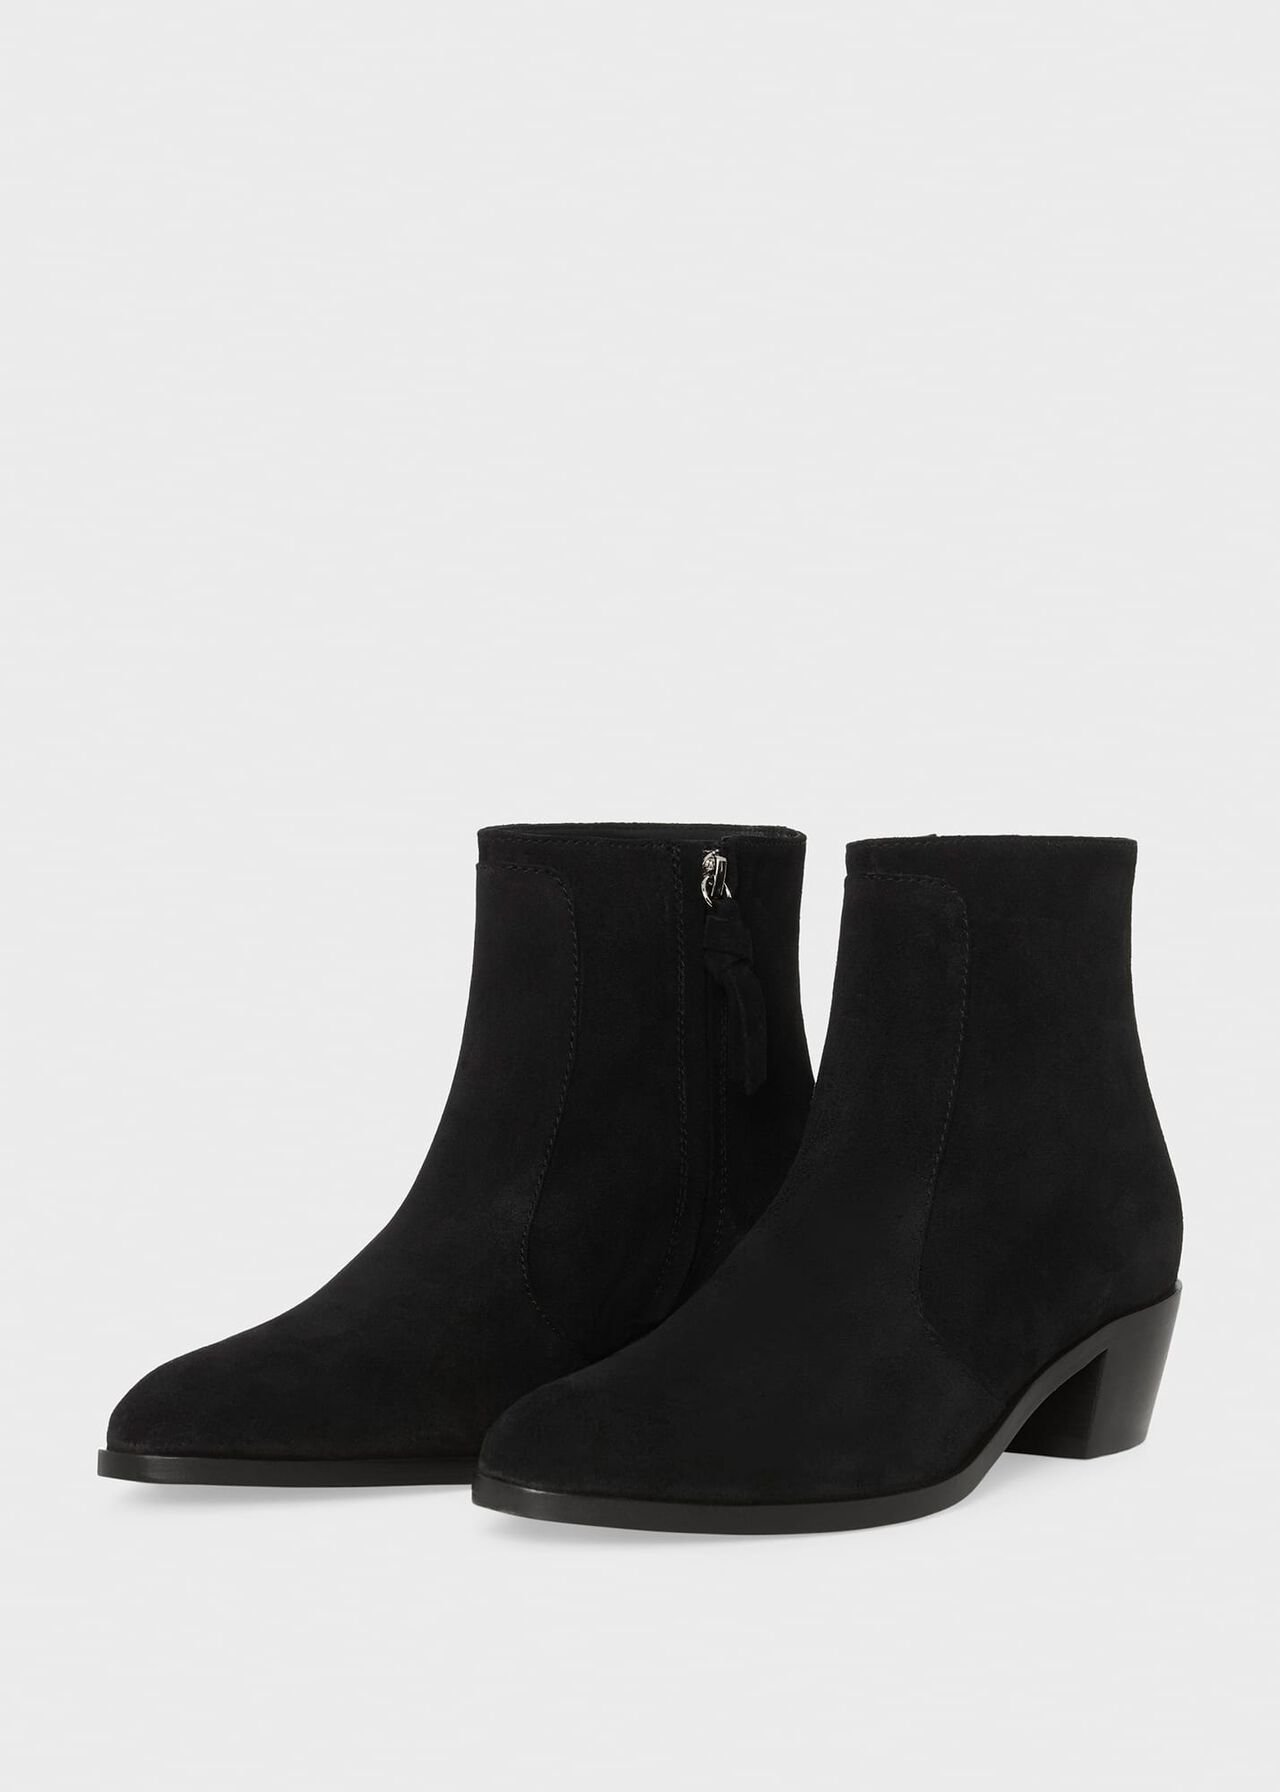 Shona Ankle Boots, Black, hi-res